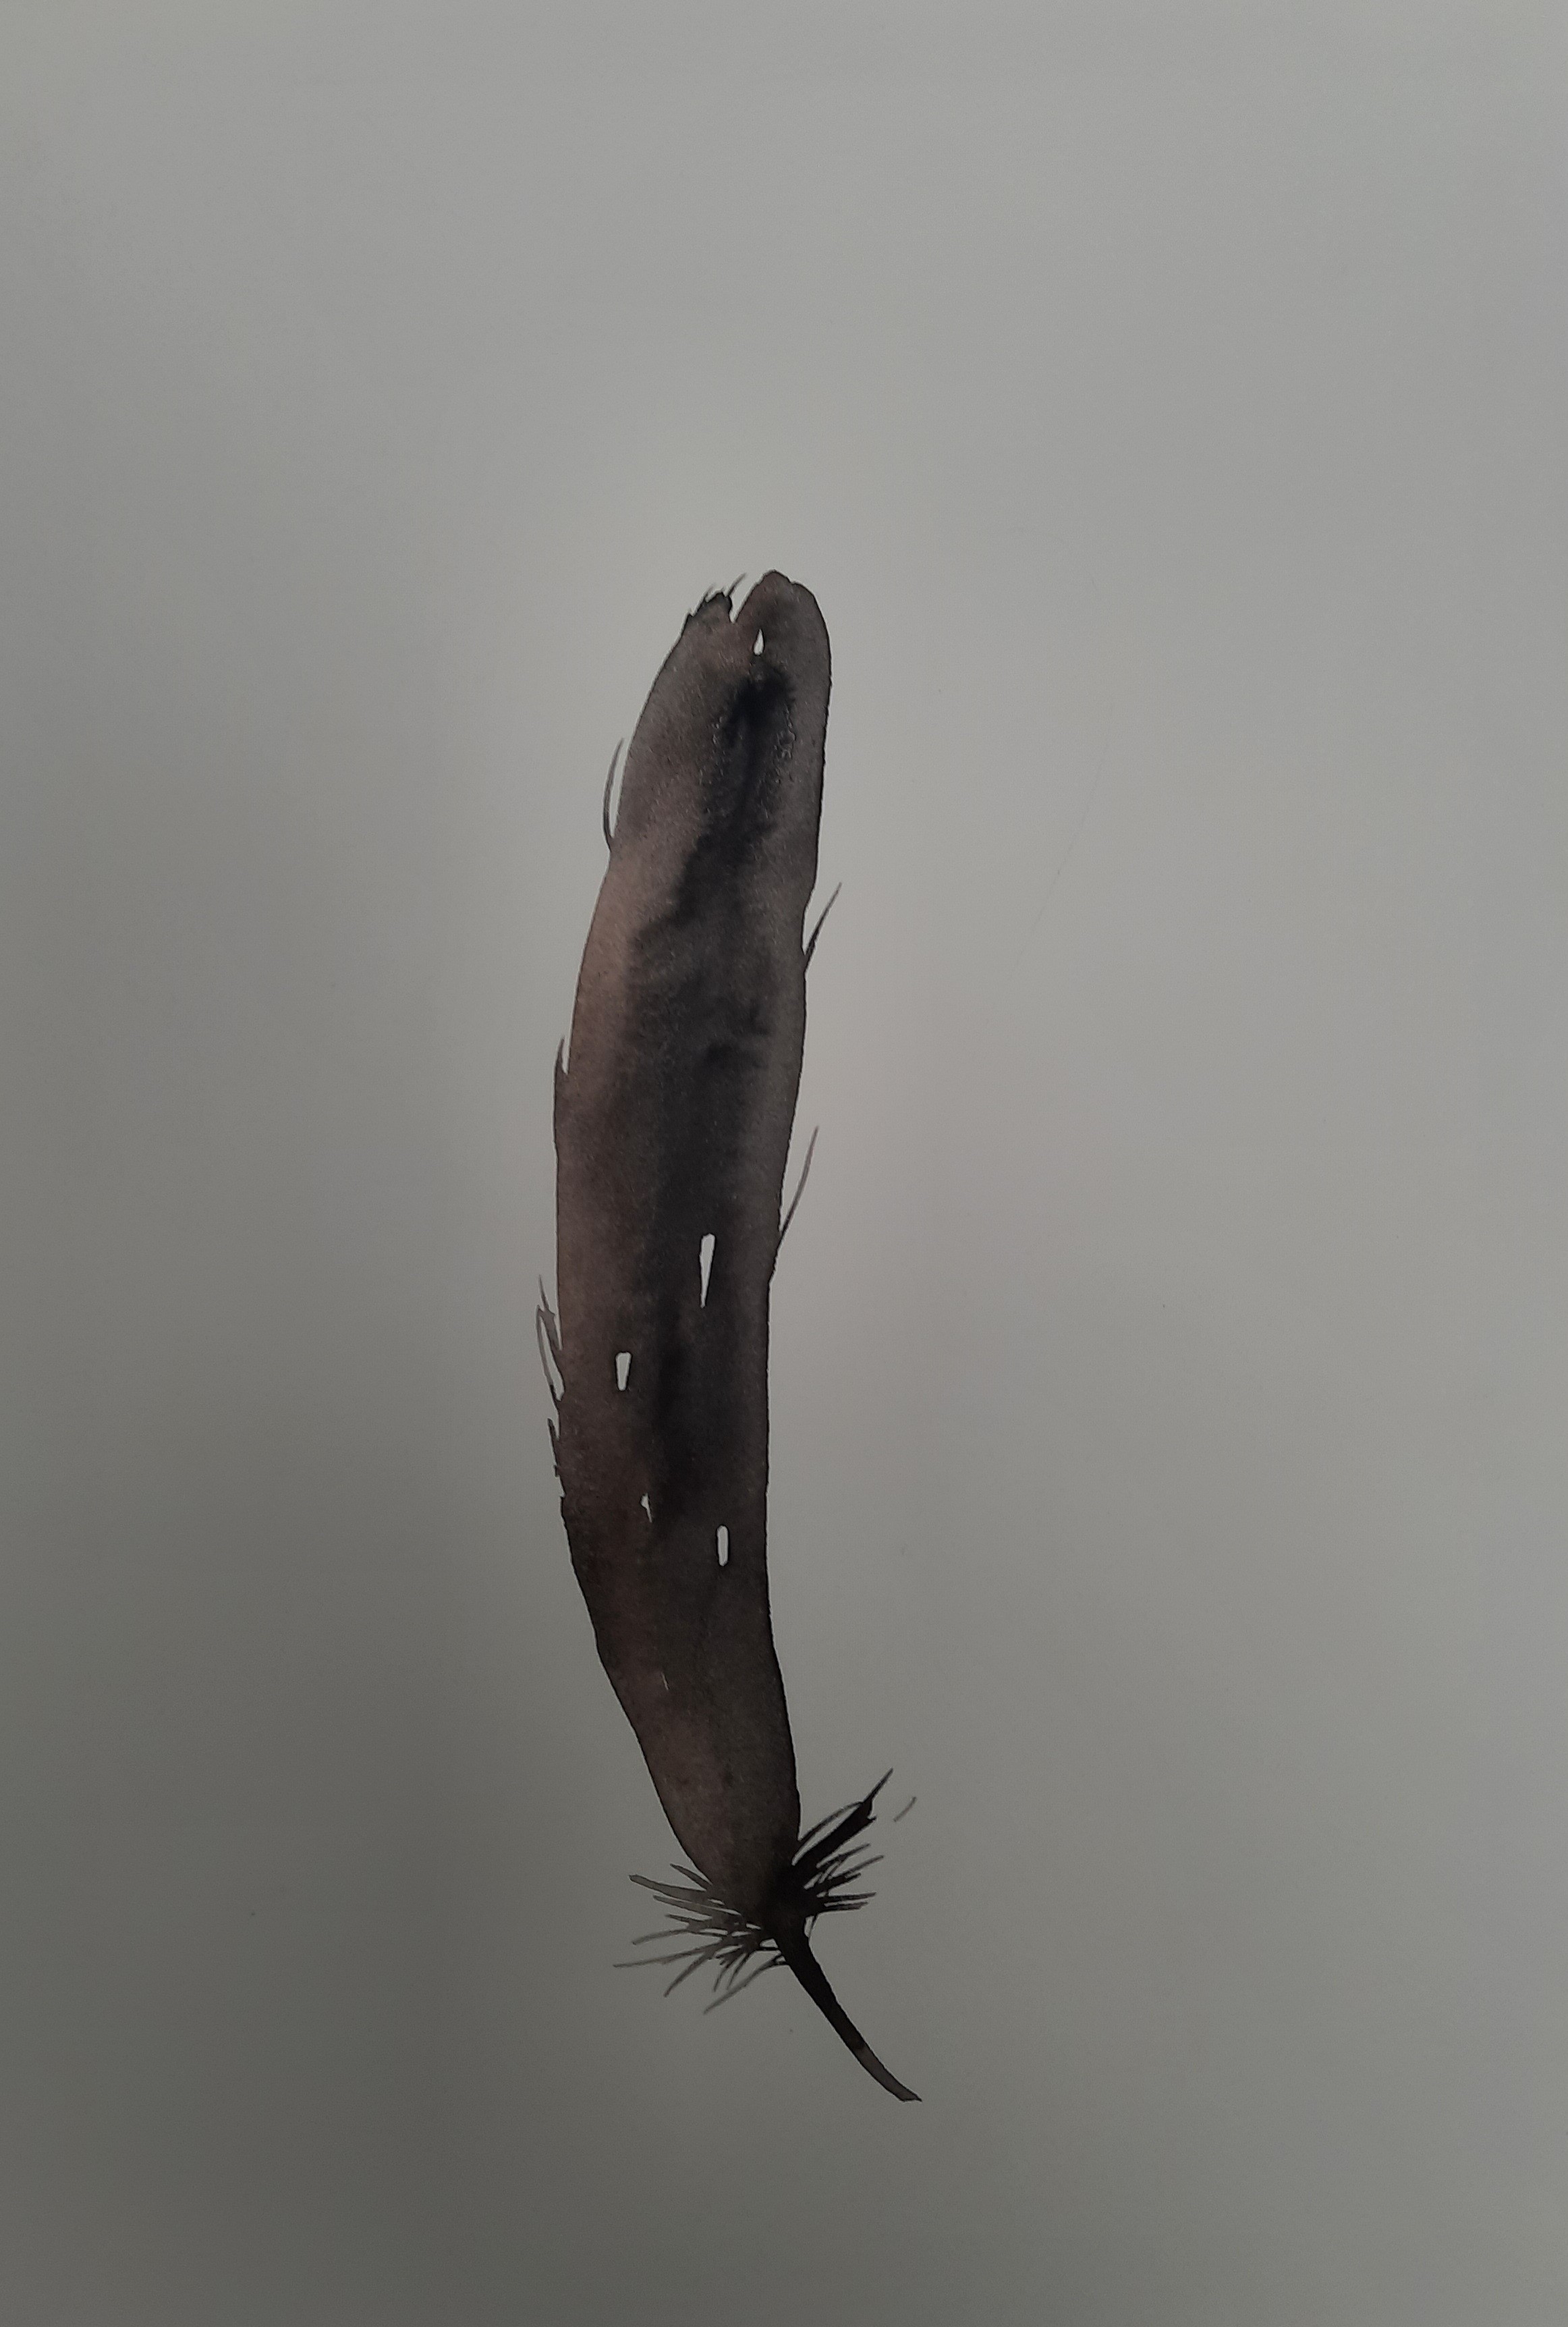 Feather by Sanjeewa Ilangarathne